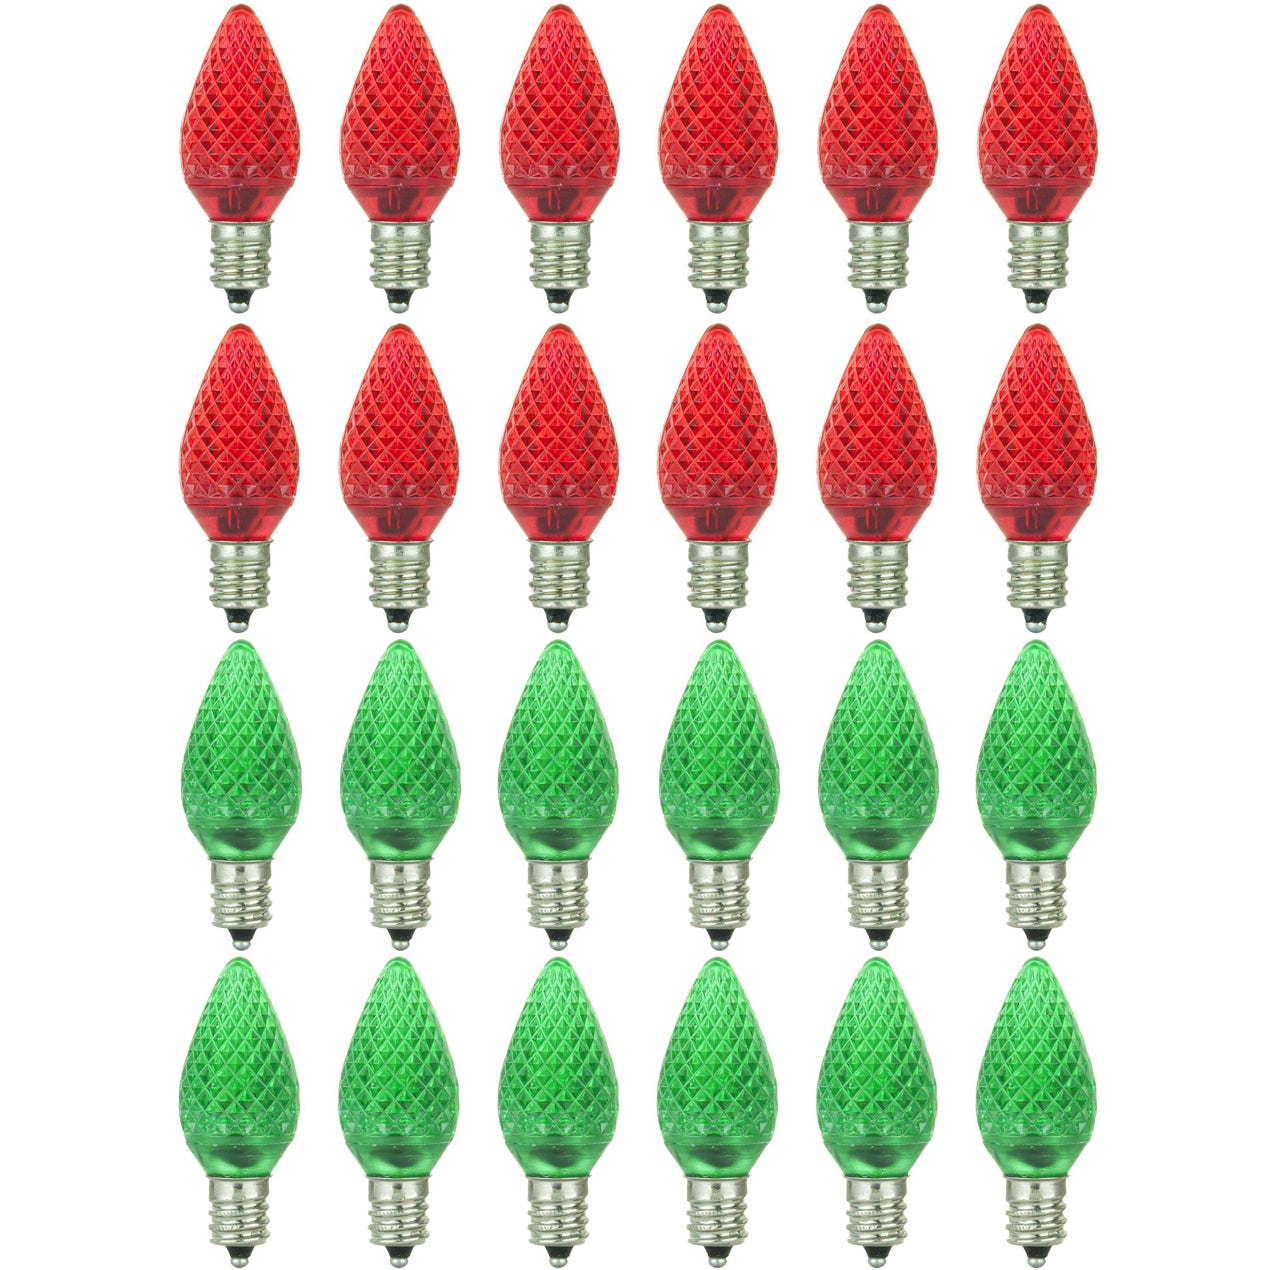 Sunlite 41289-SU Decorative Holiday Light Bulbs, Christmas Lighting, LED C7, e12 Candelabra Base, 0.4 Watt, Red and Green, 24 Pack